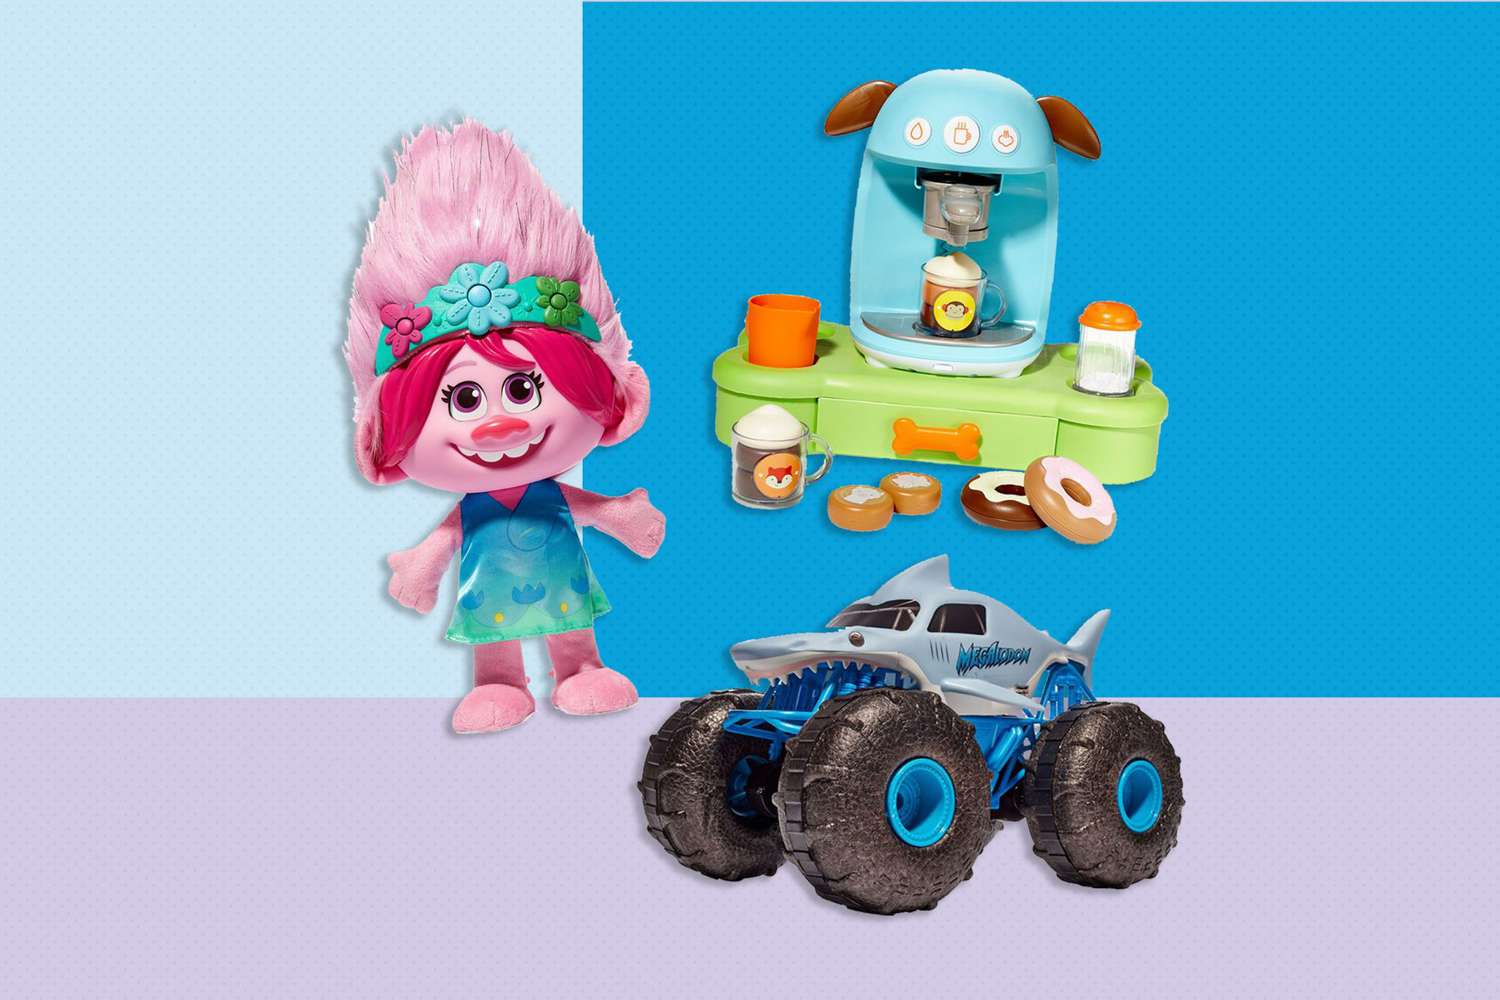 Parents best toys for preschoolers 2020